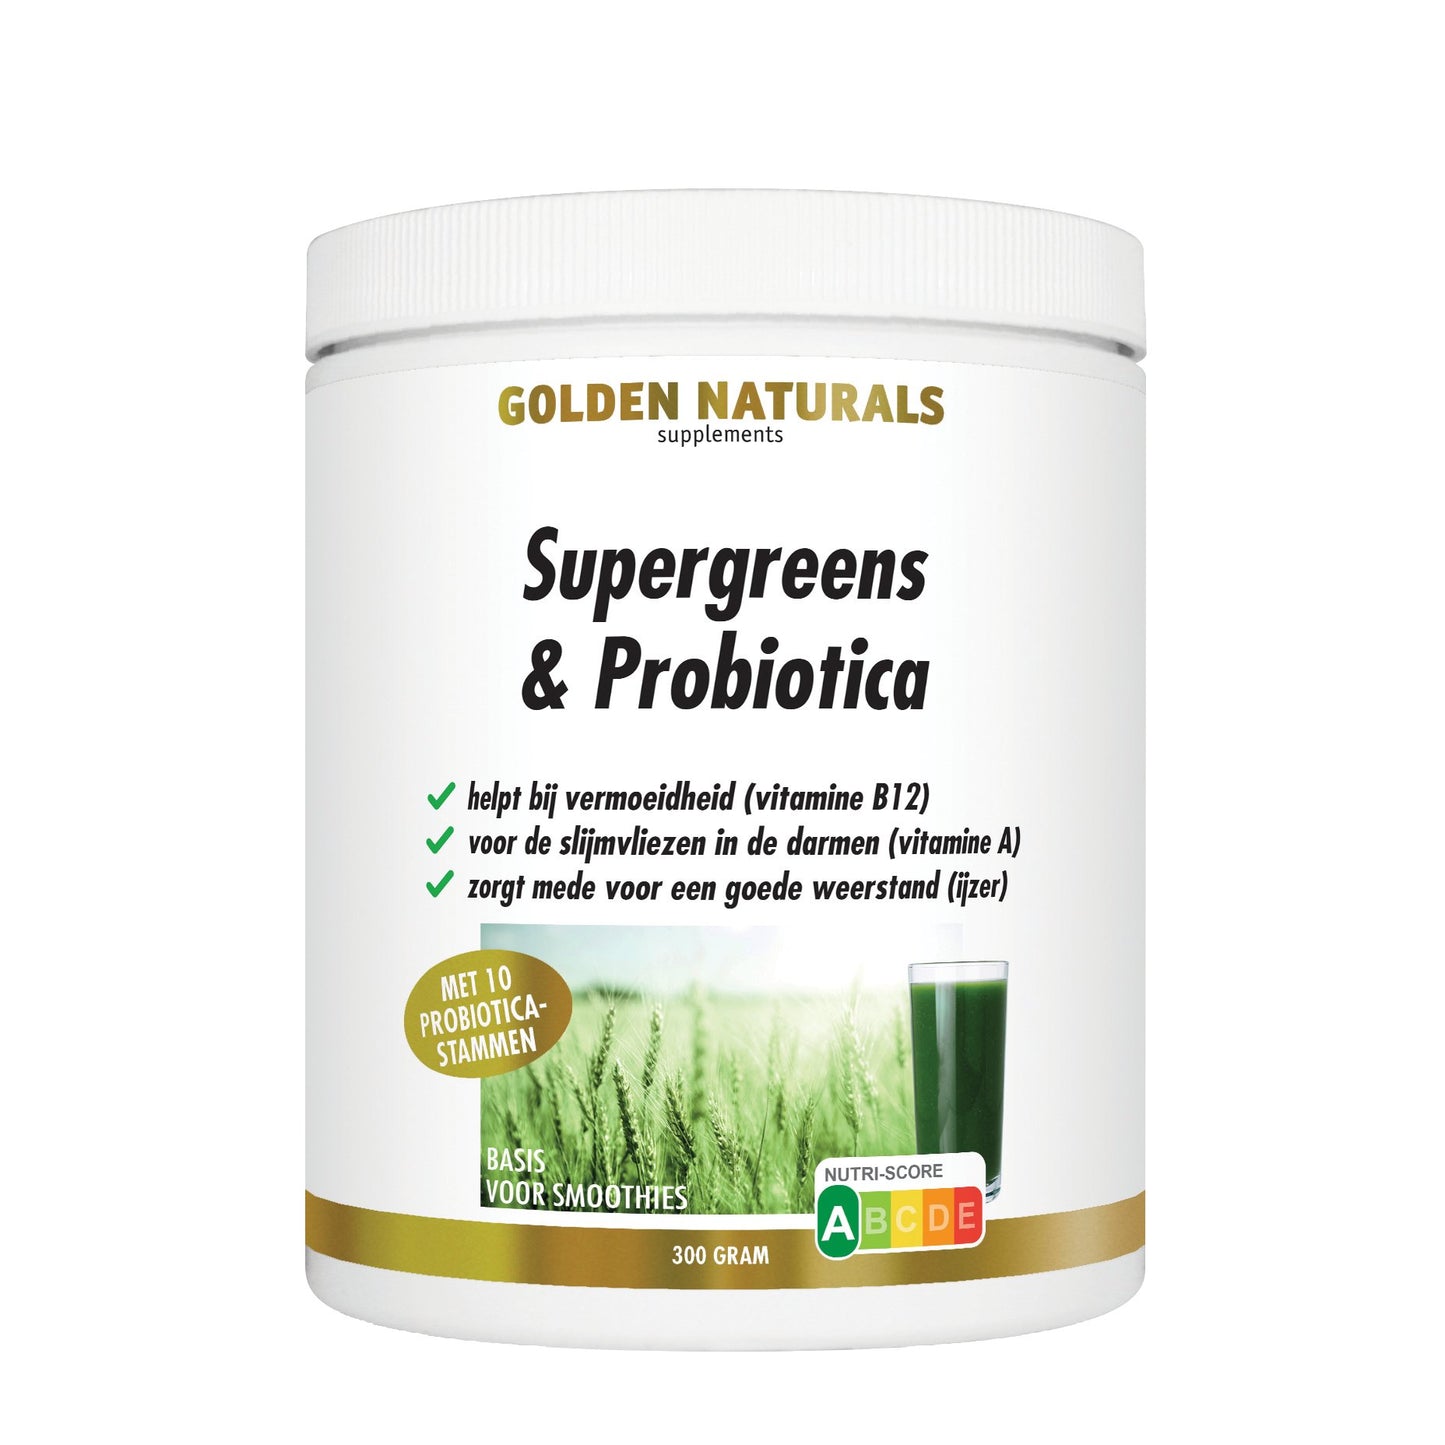 Supergreens & Probiotica - 300 - gram poeder Supplement Golden Naturals   